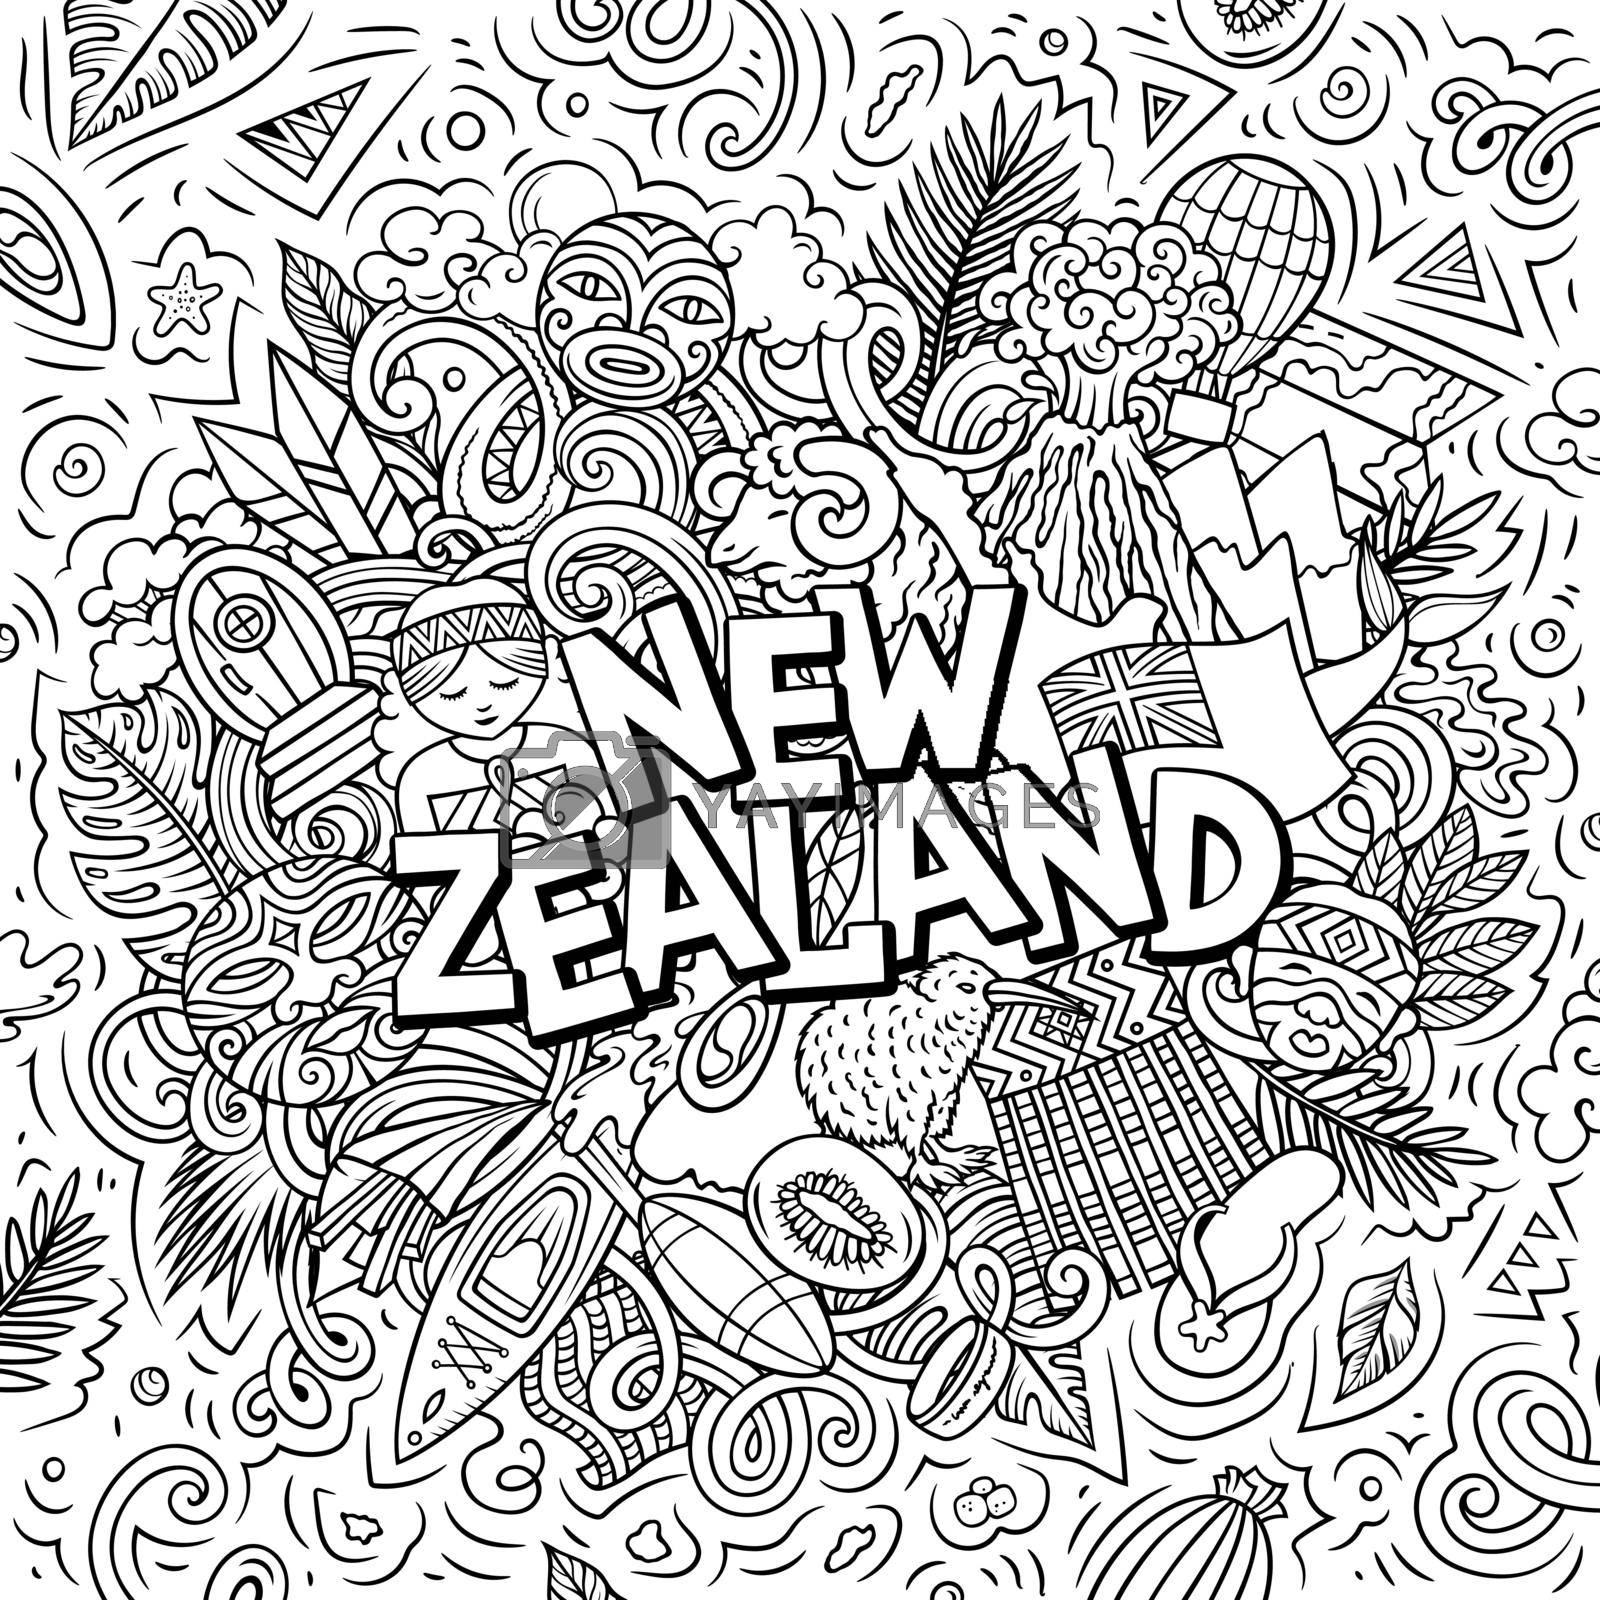 Royalty free image of New Zealand hand drawn cartoon doodle illustration. Funny local design. by balabolka